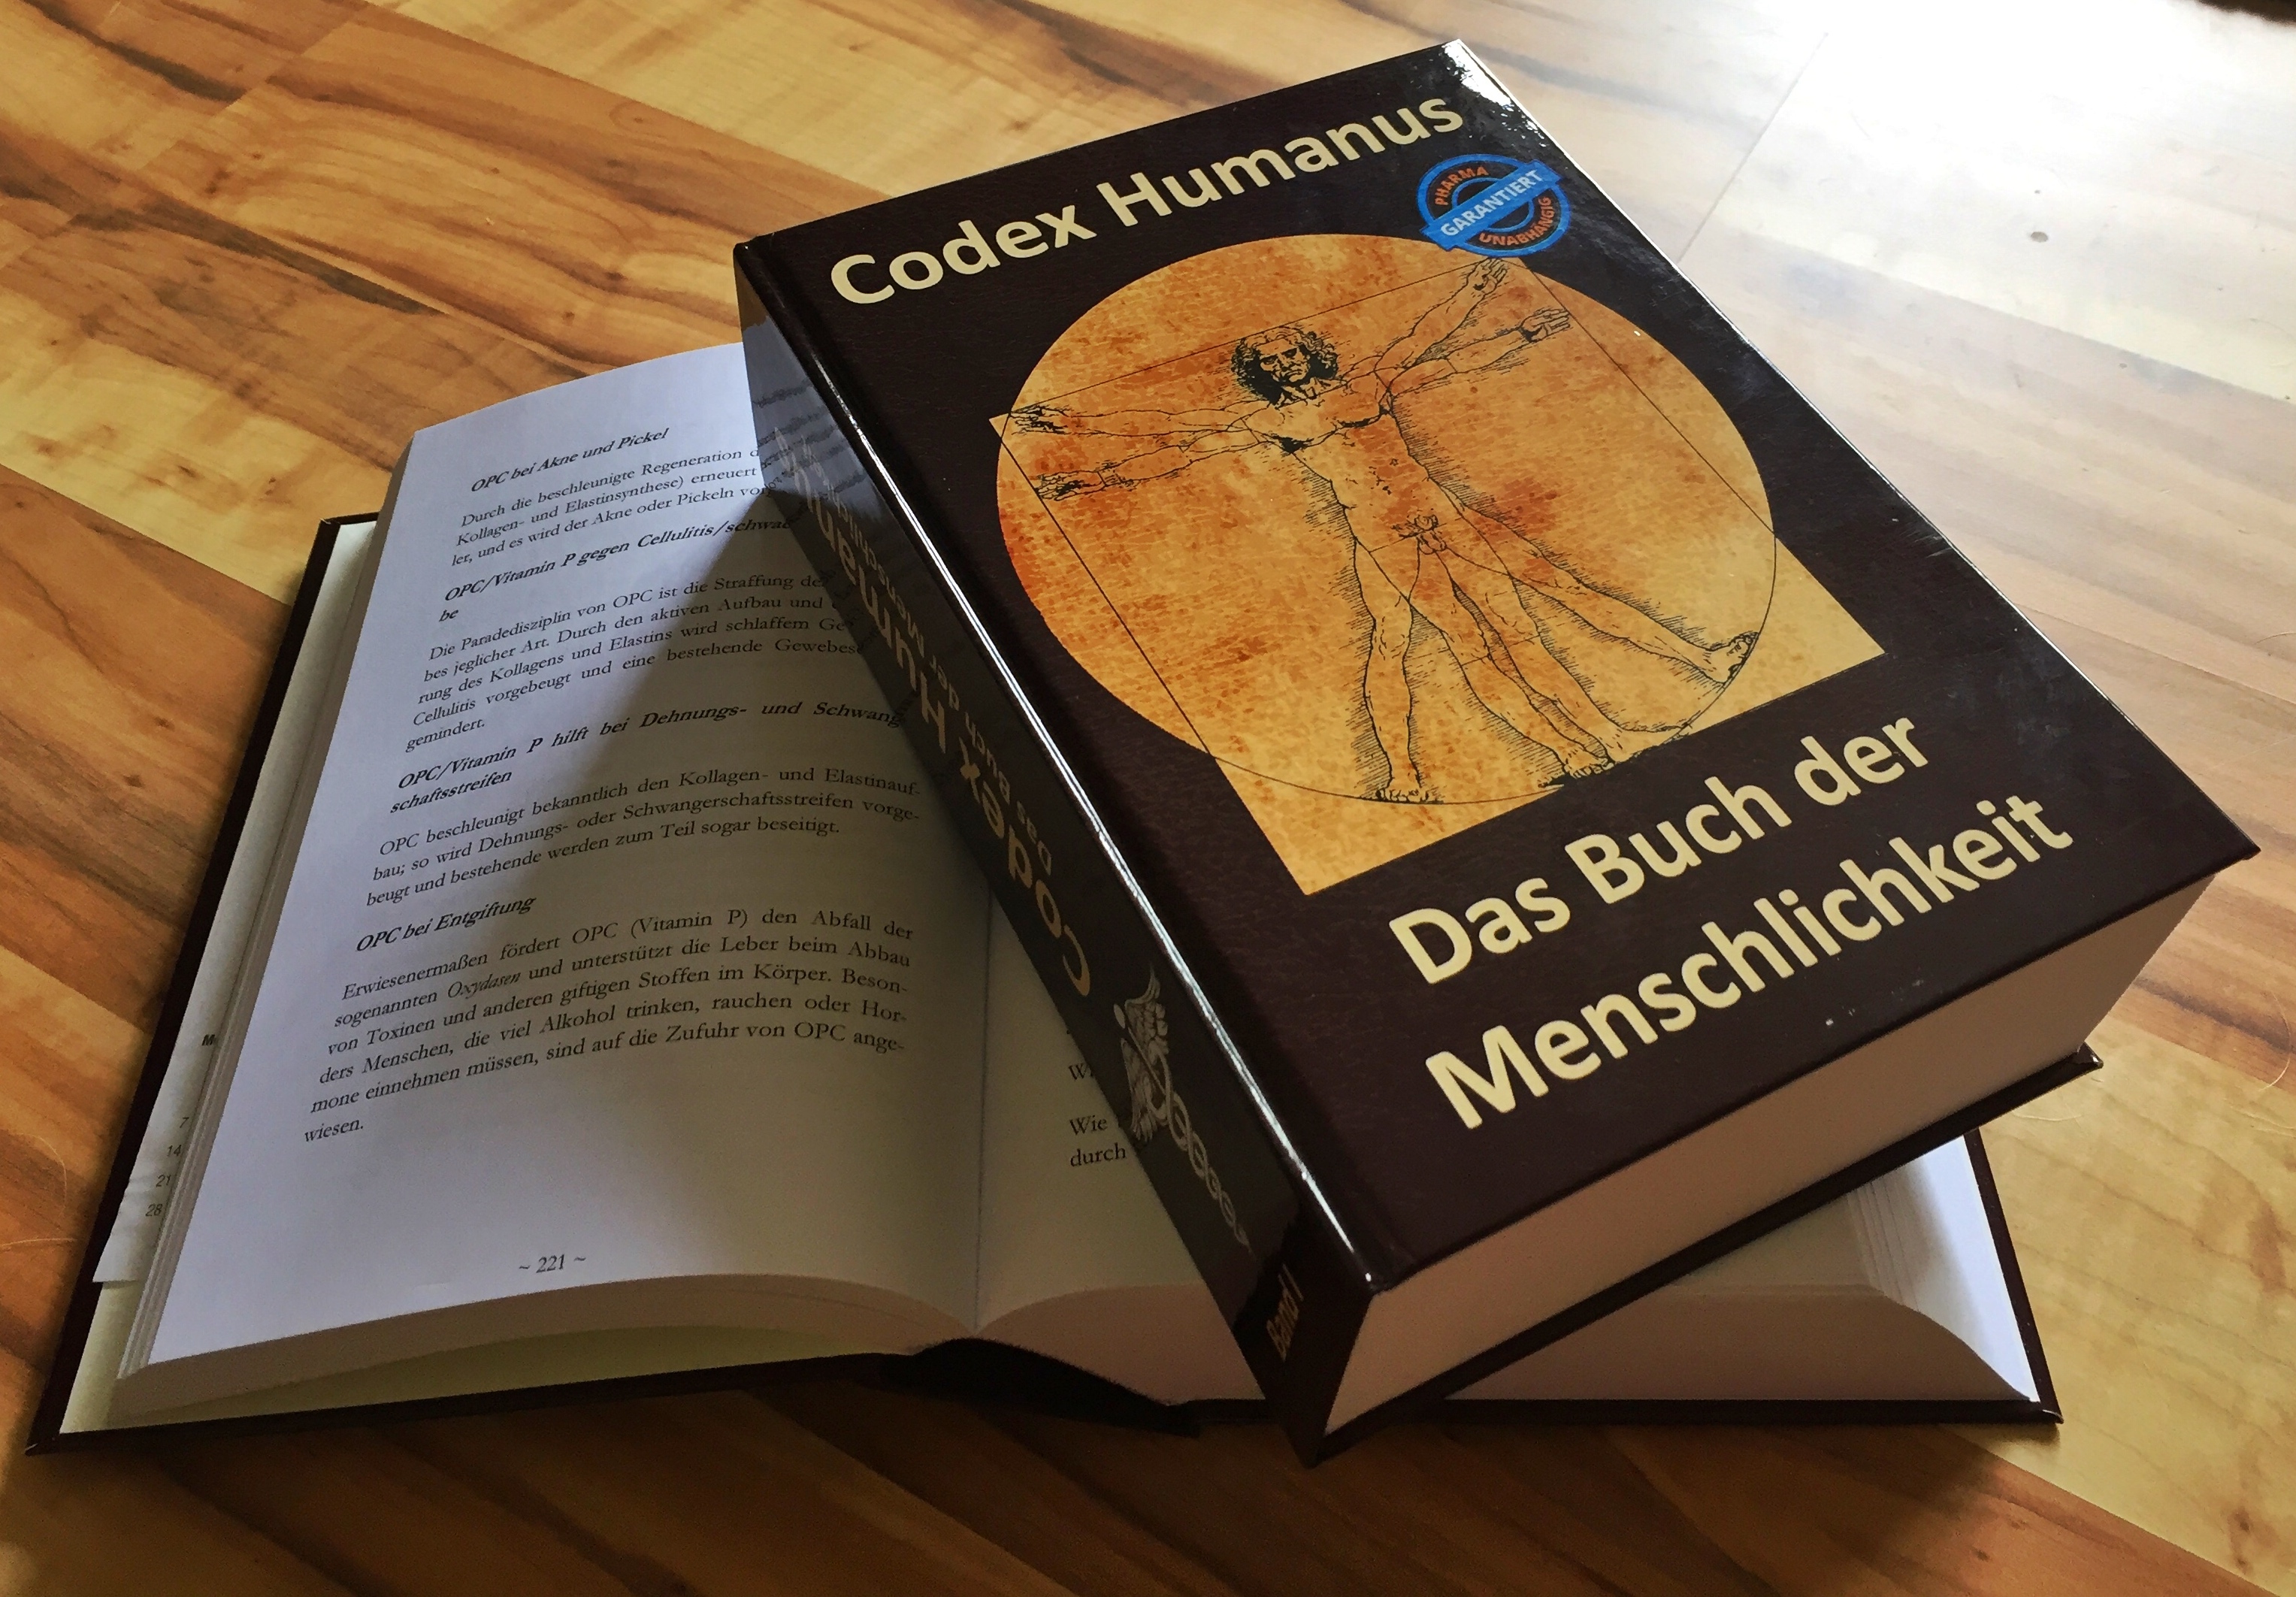 Codex_Humanus